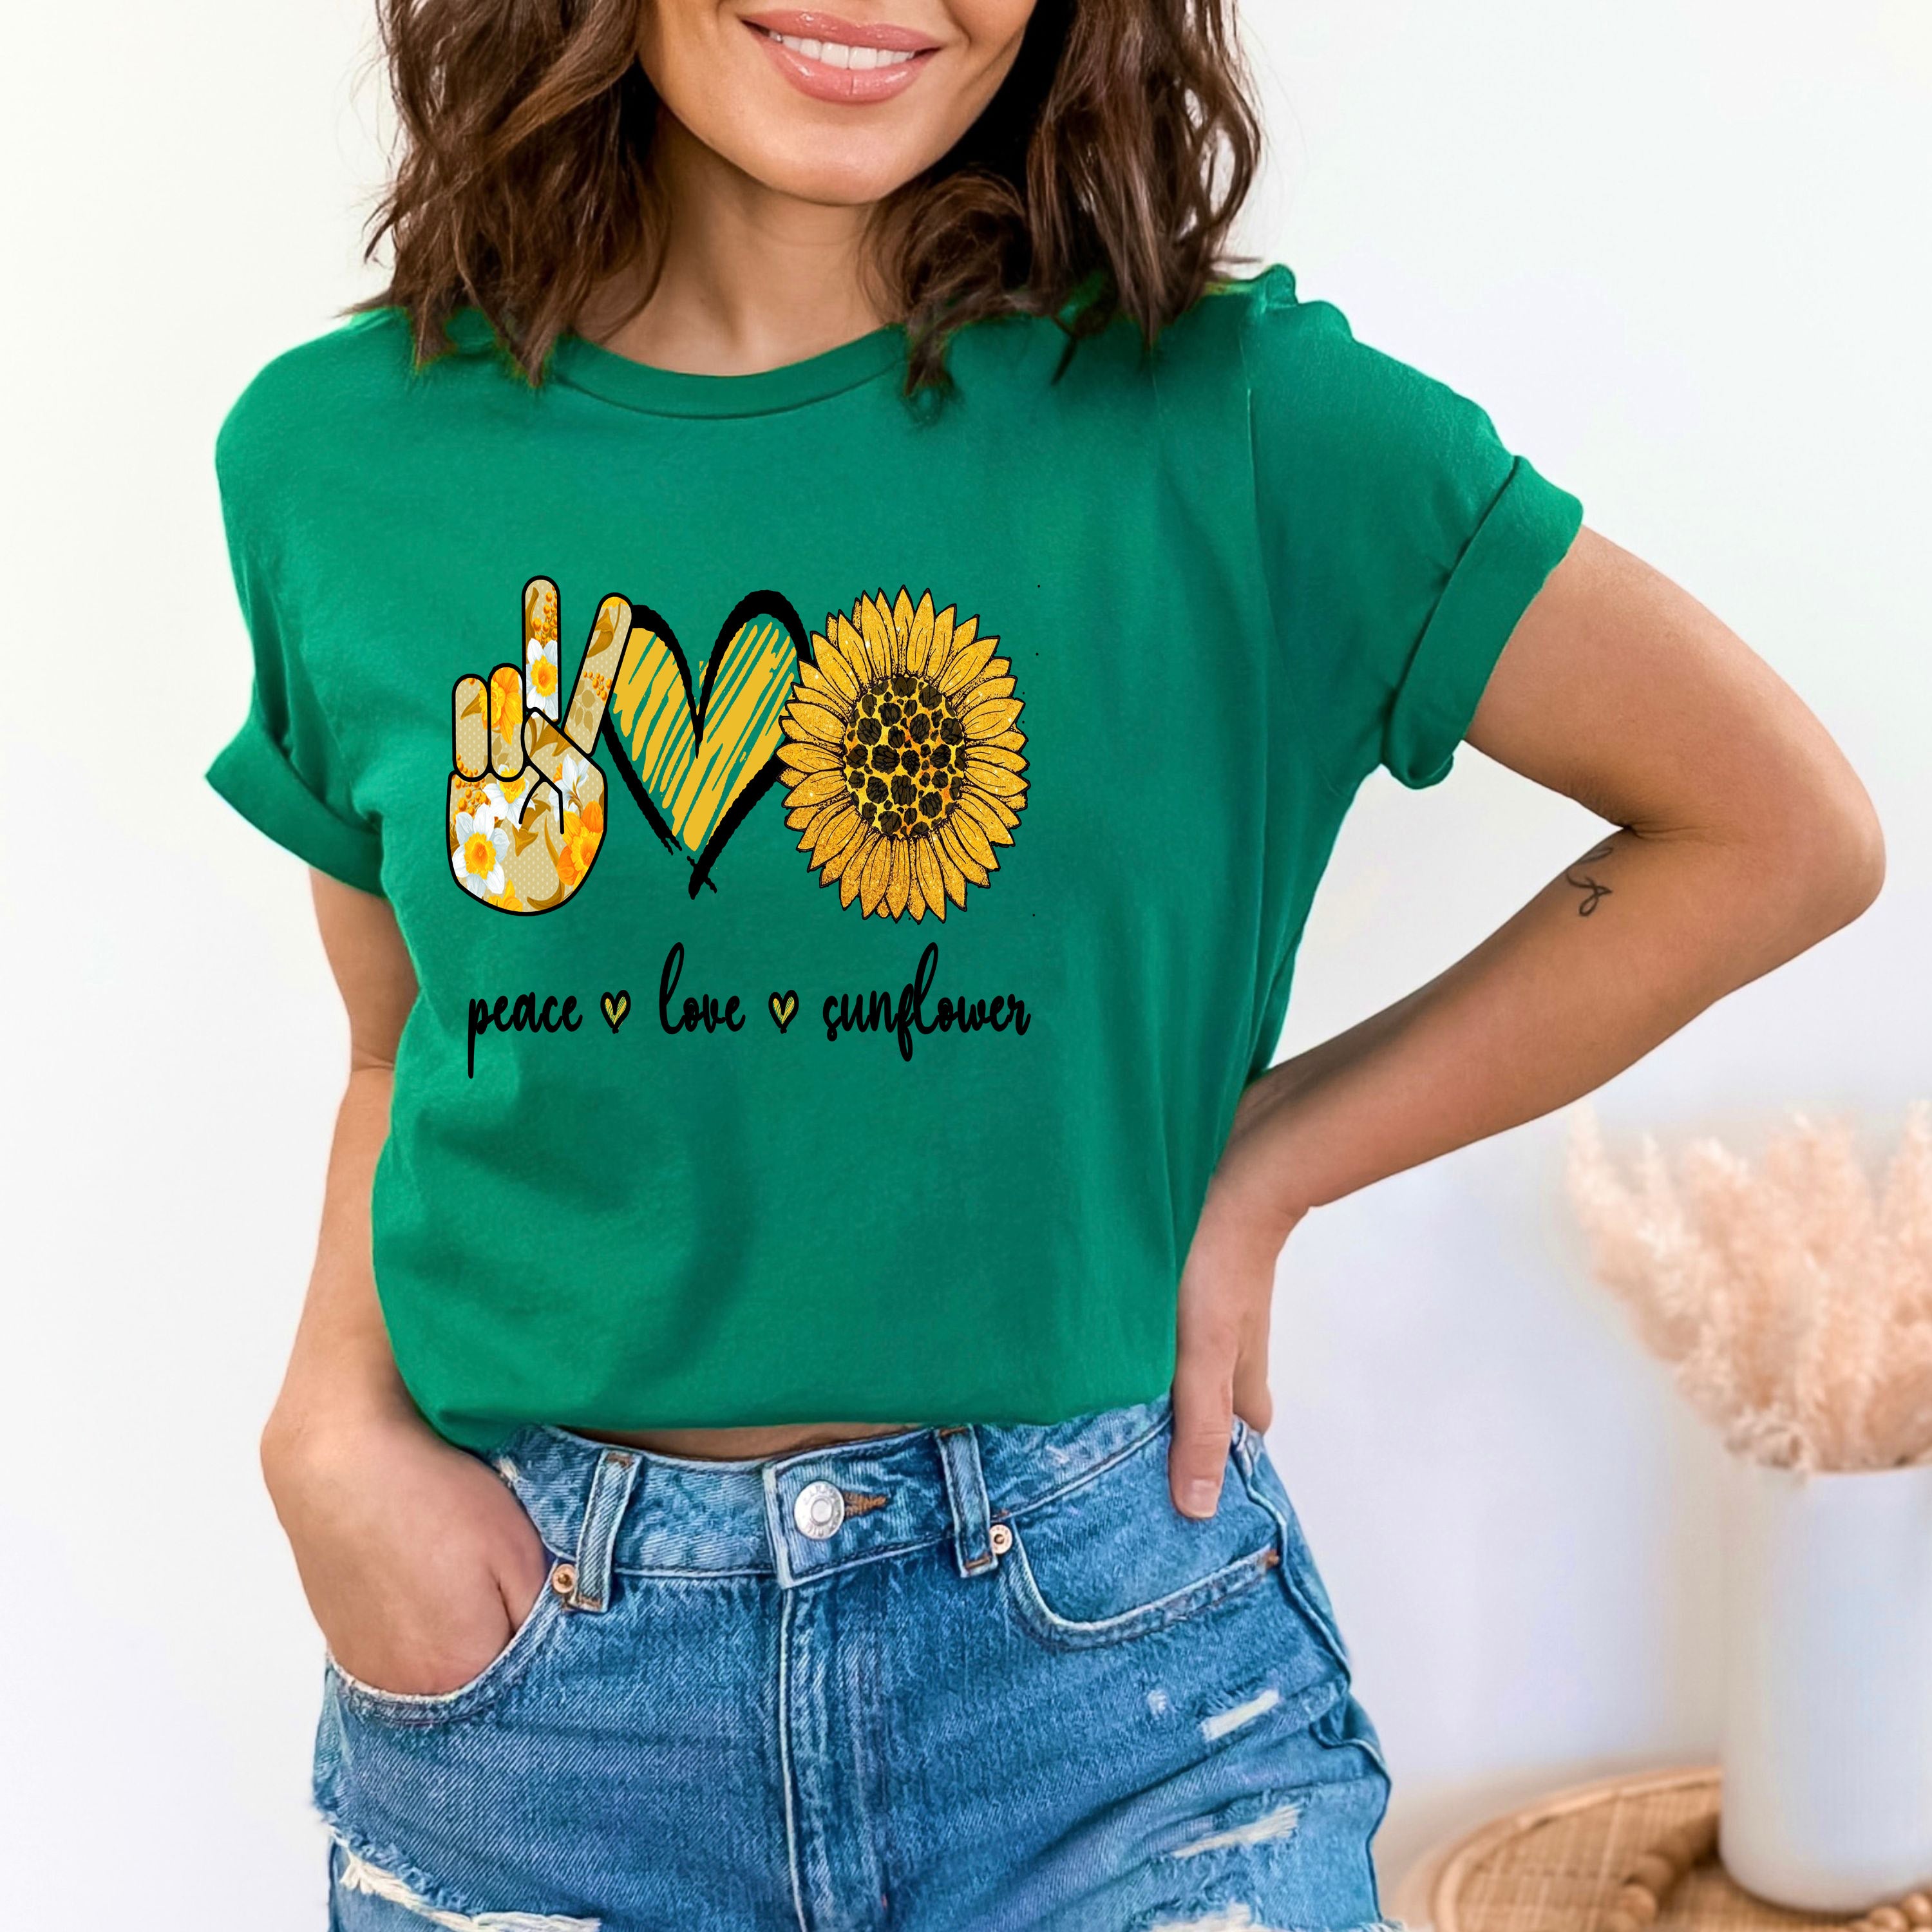 "peace love sunflower"